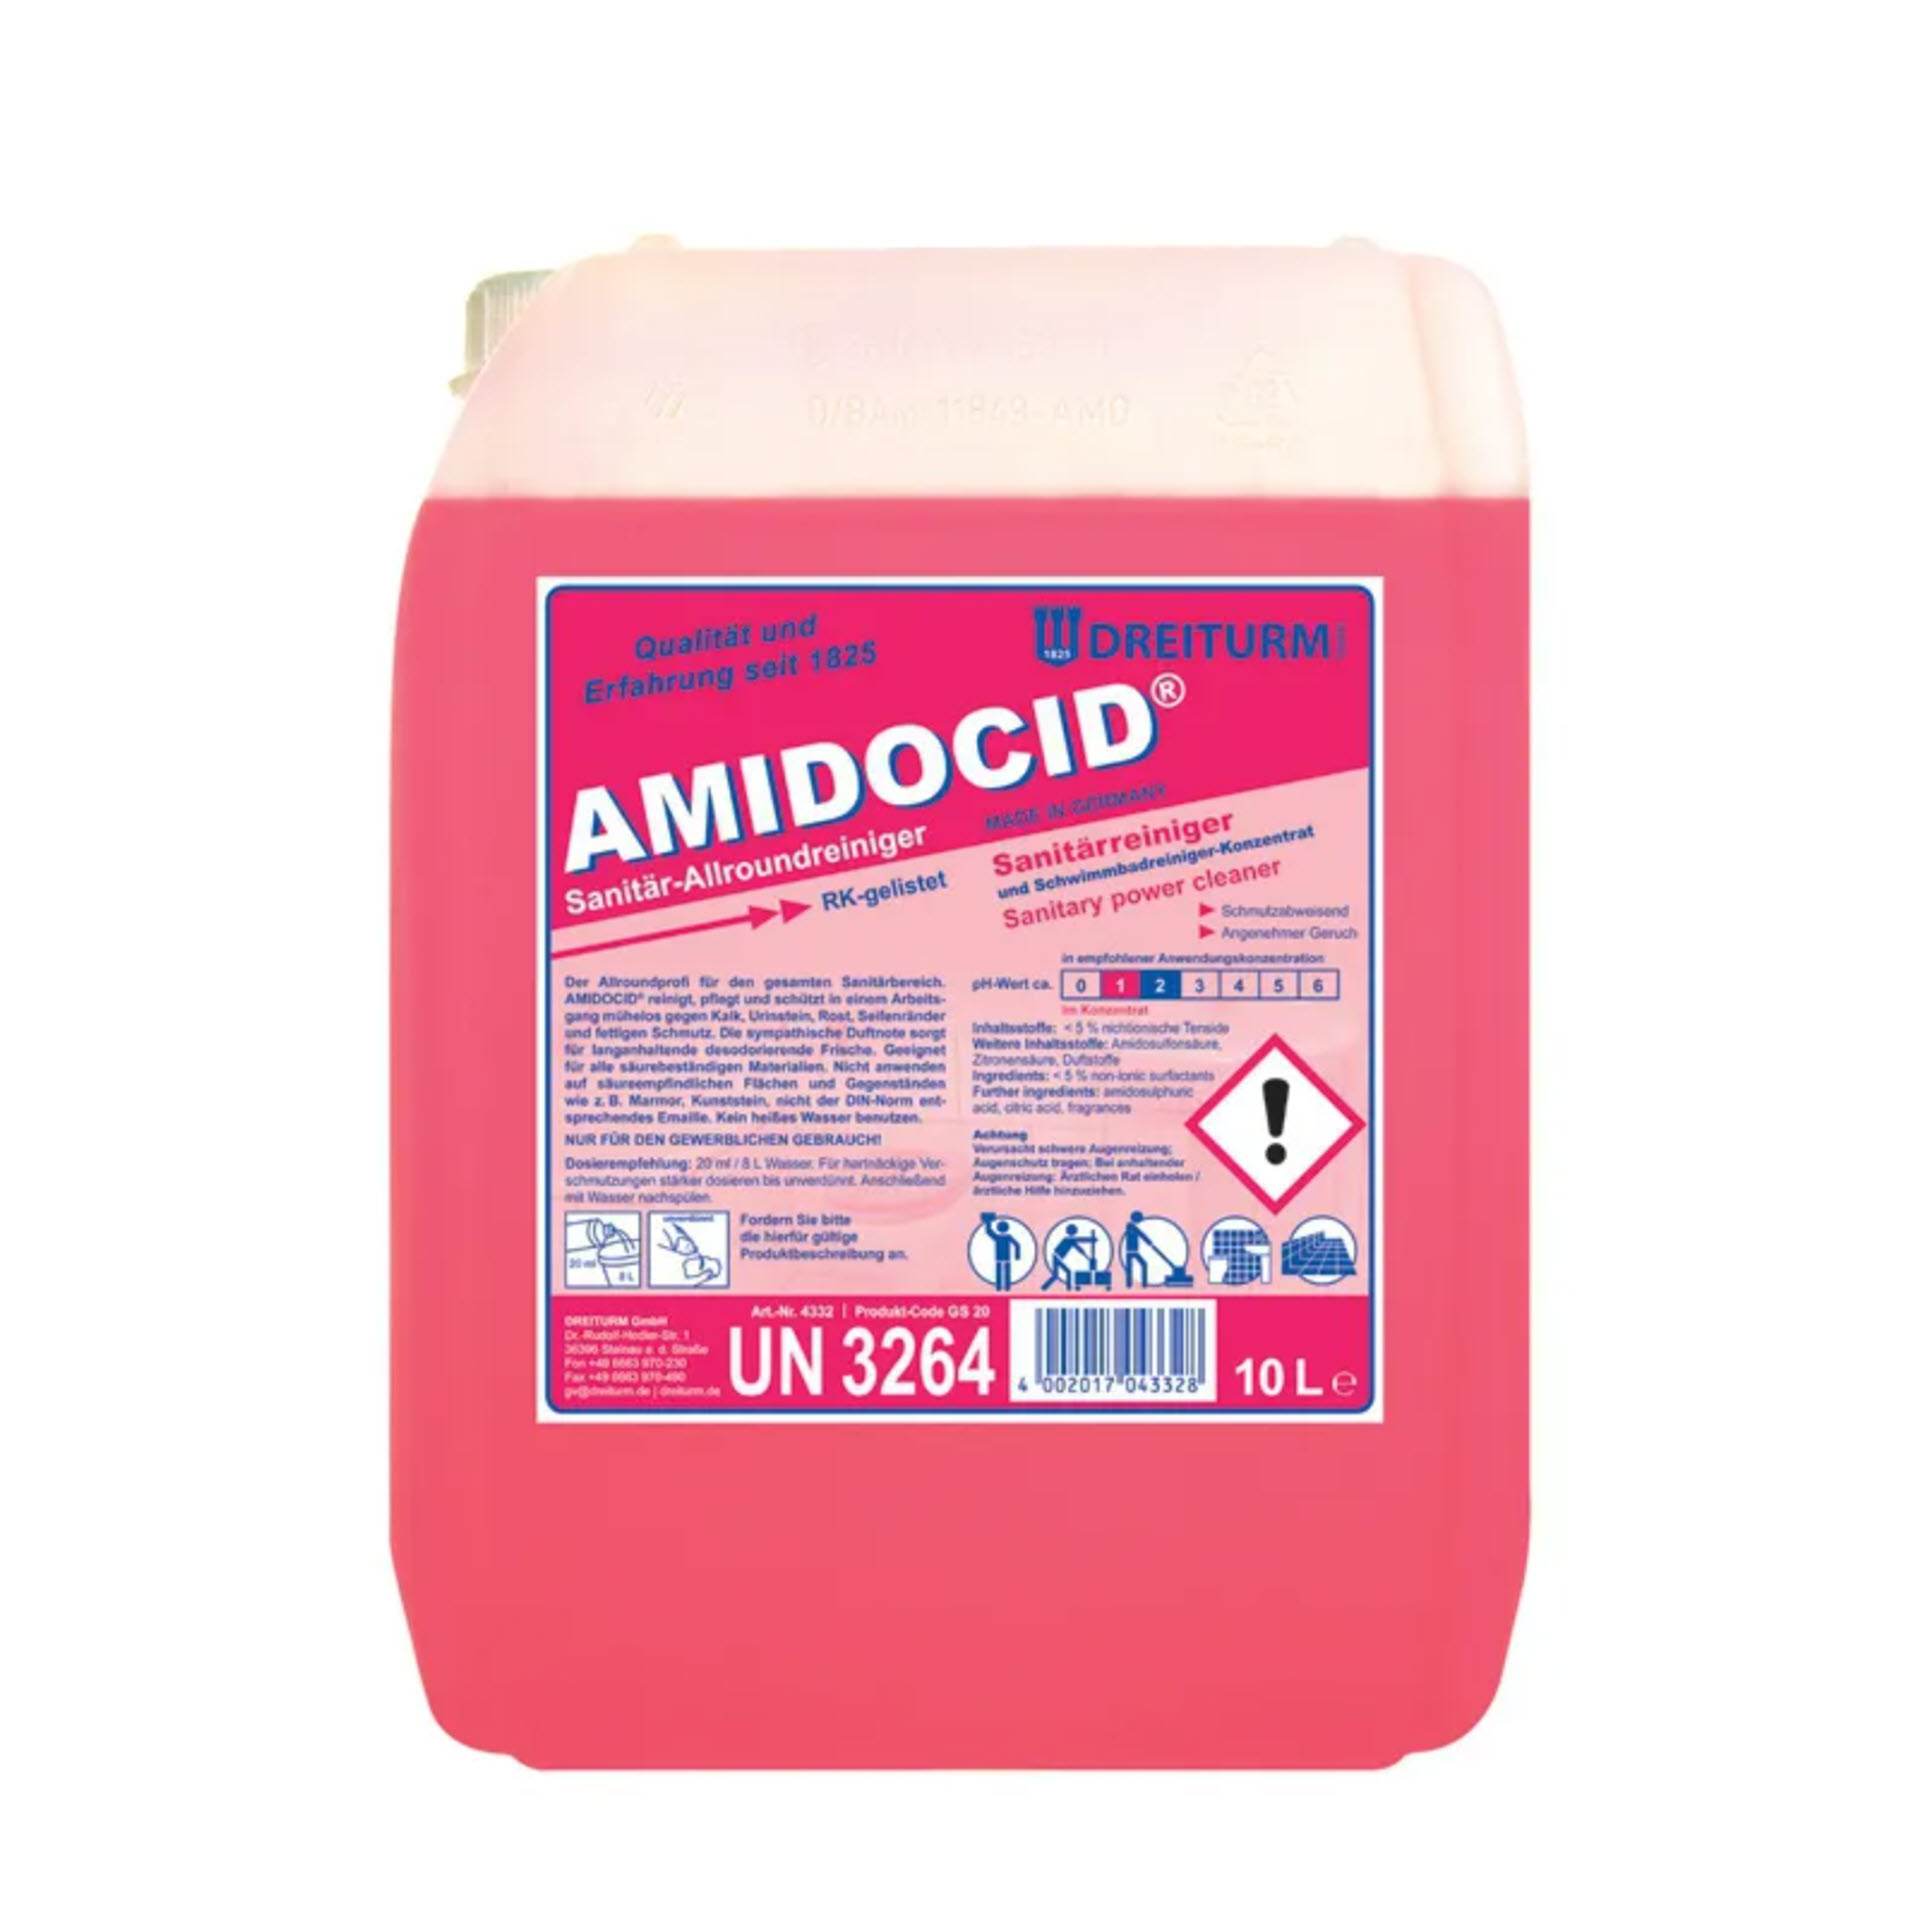 Dreiturm AMIDOCID® Sanitärreiniger - 10 Liter Kanister